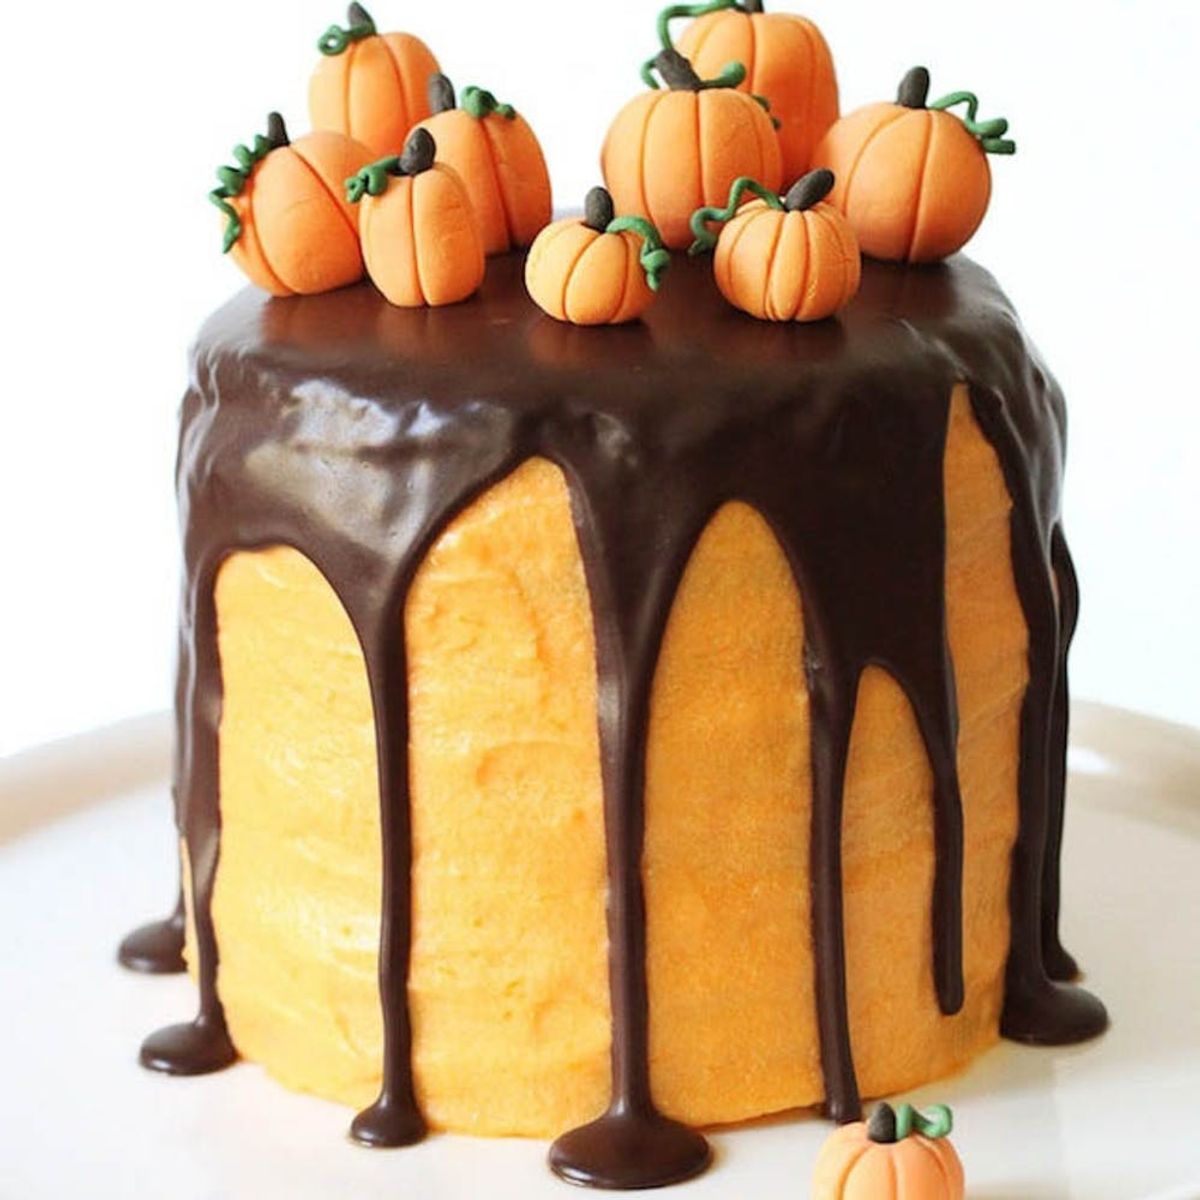 50 Perfect Pumpkin Recipes for Every Halloween Festivity